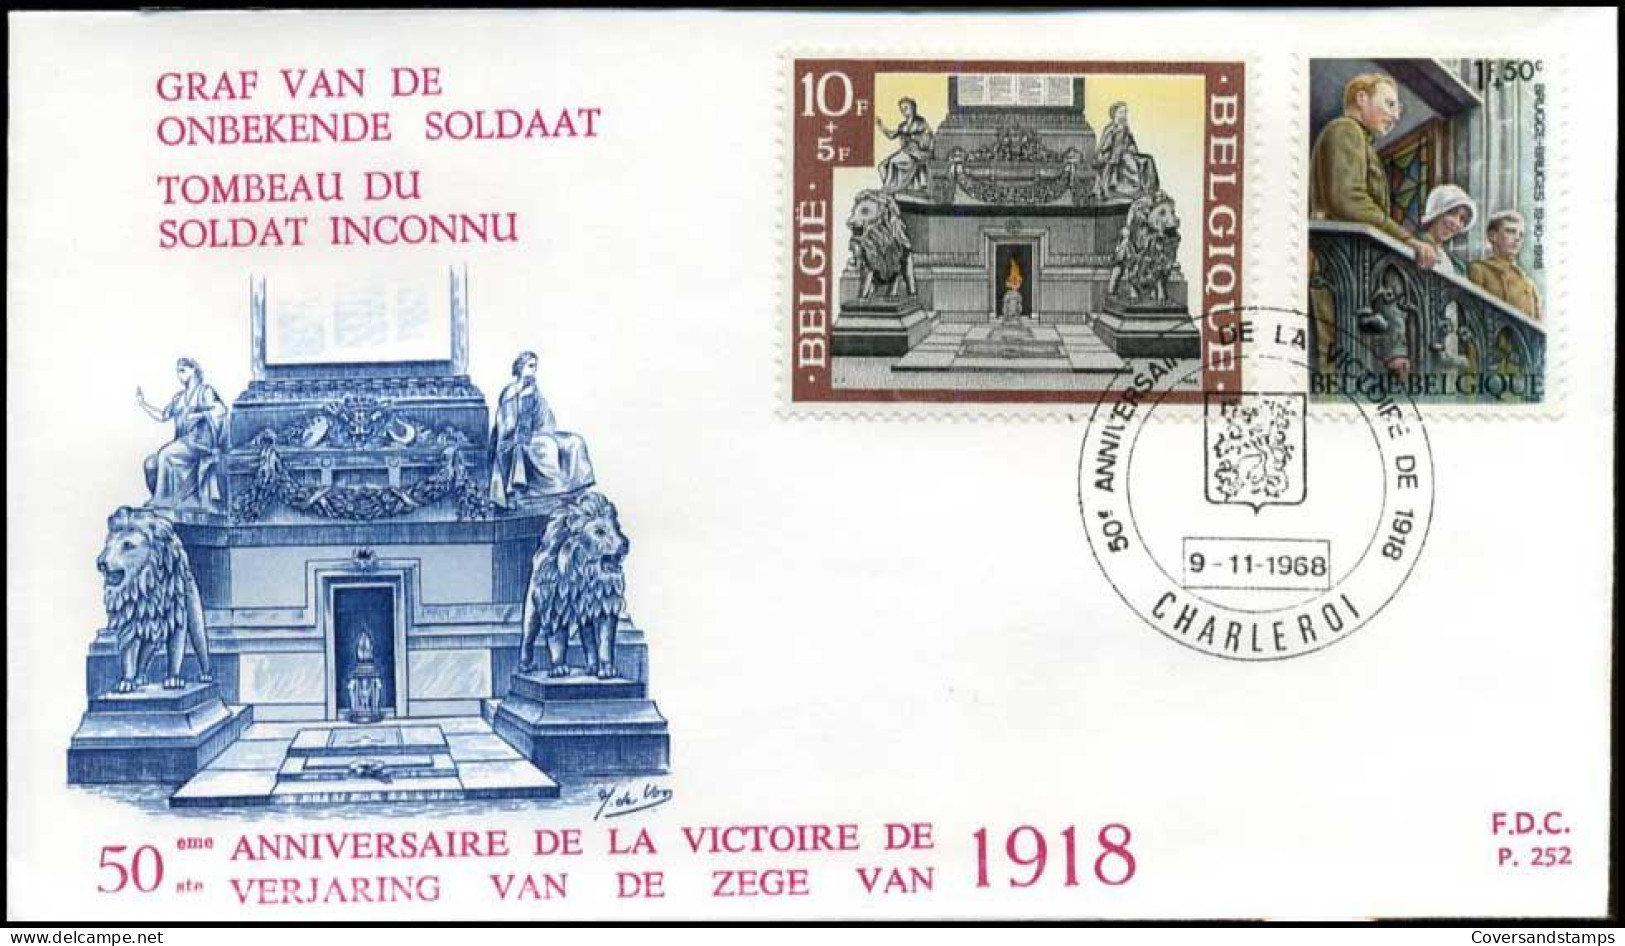 België - FDC -1474/77 - Blijde Intrede Van Het Koninklijkj Paar -- Stempel  :  Charleroi - 1961-1970